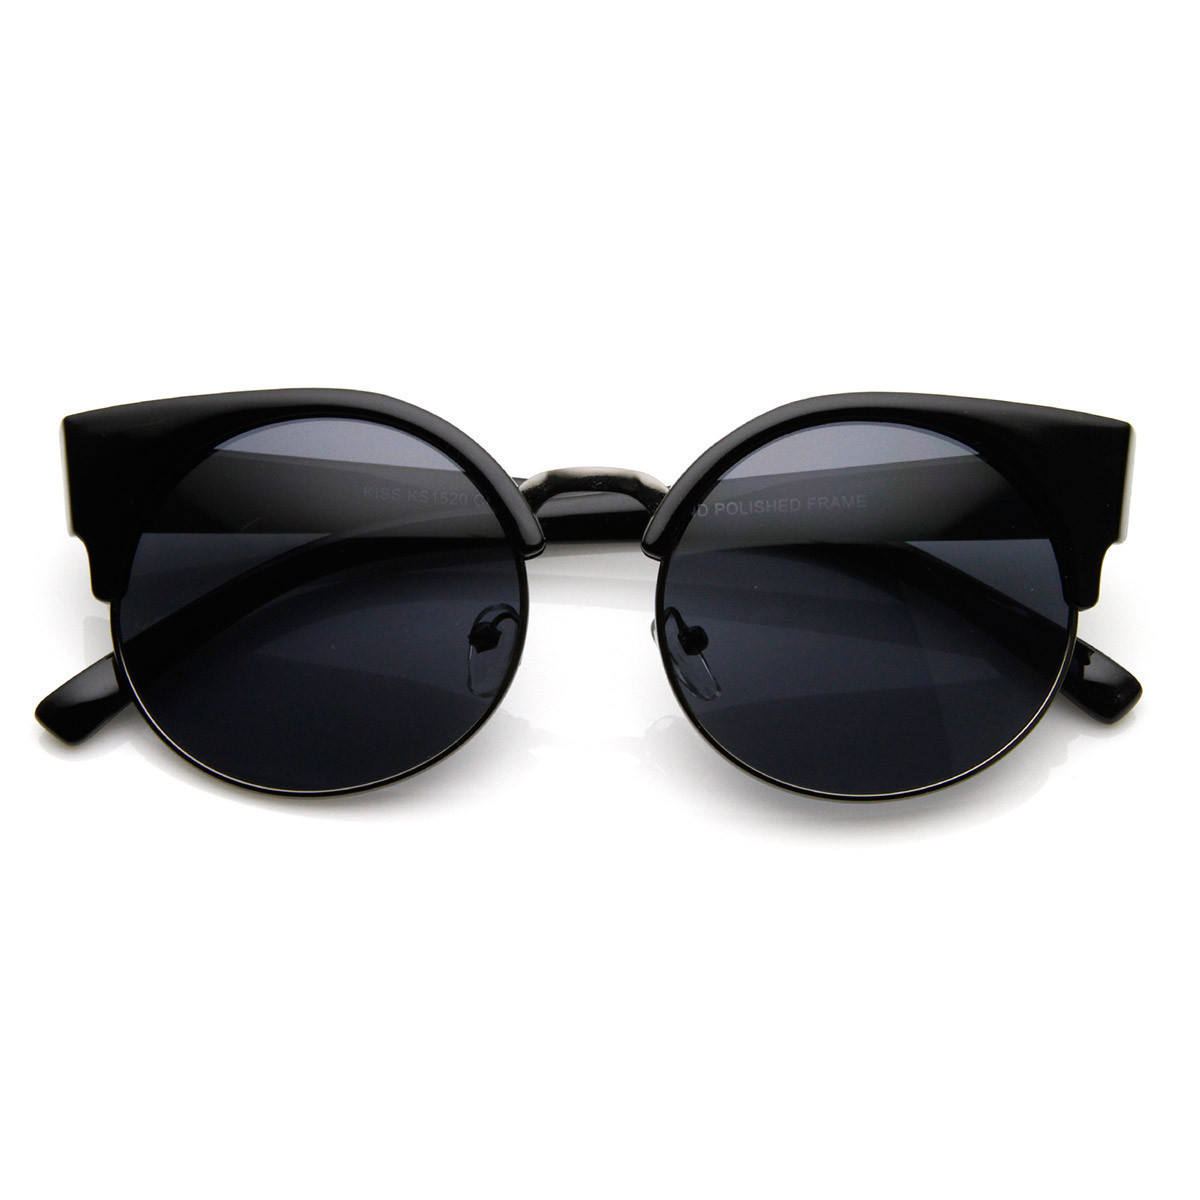 Round Circle Half Frame Semi-Rimless Cateye Sunglasses - 8785 - Tortoise